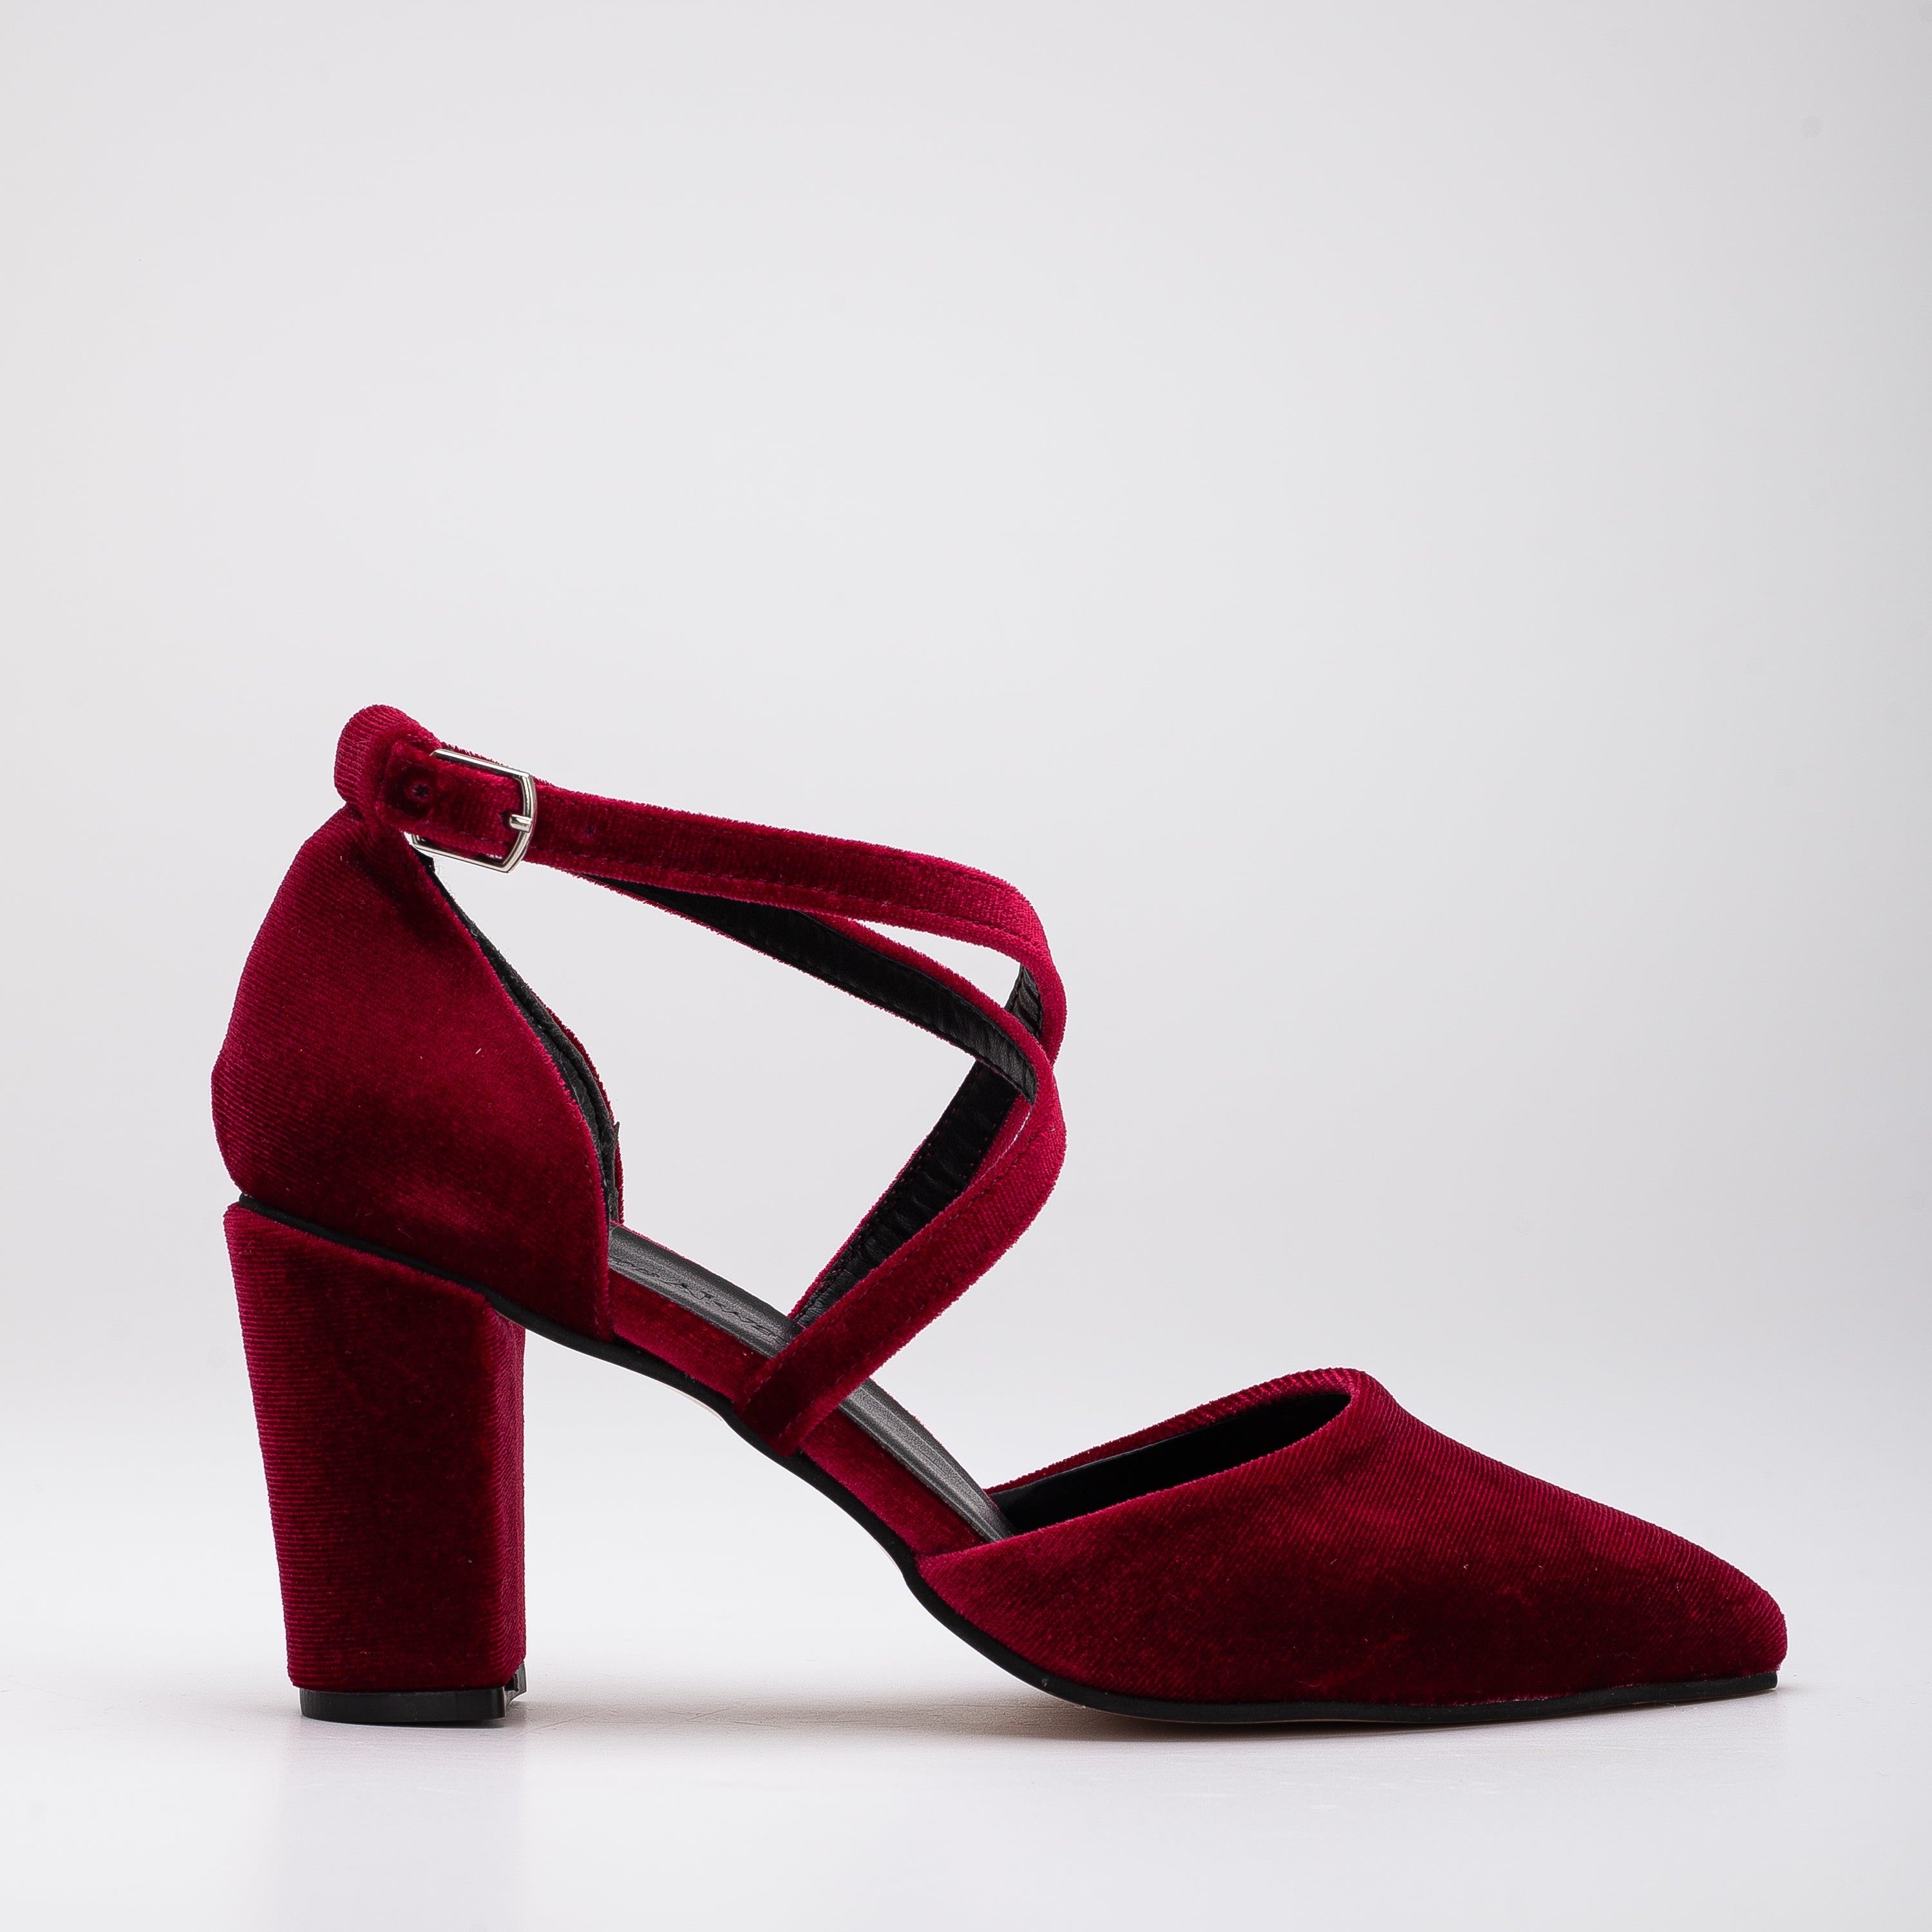 CUPLE – Women's high heel shoes in a trendy Maroon color – Cuple